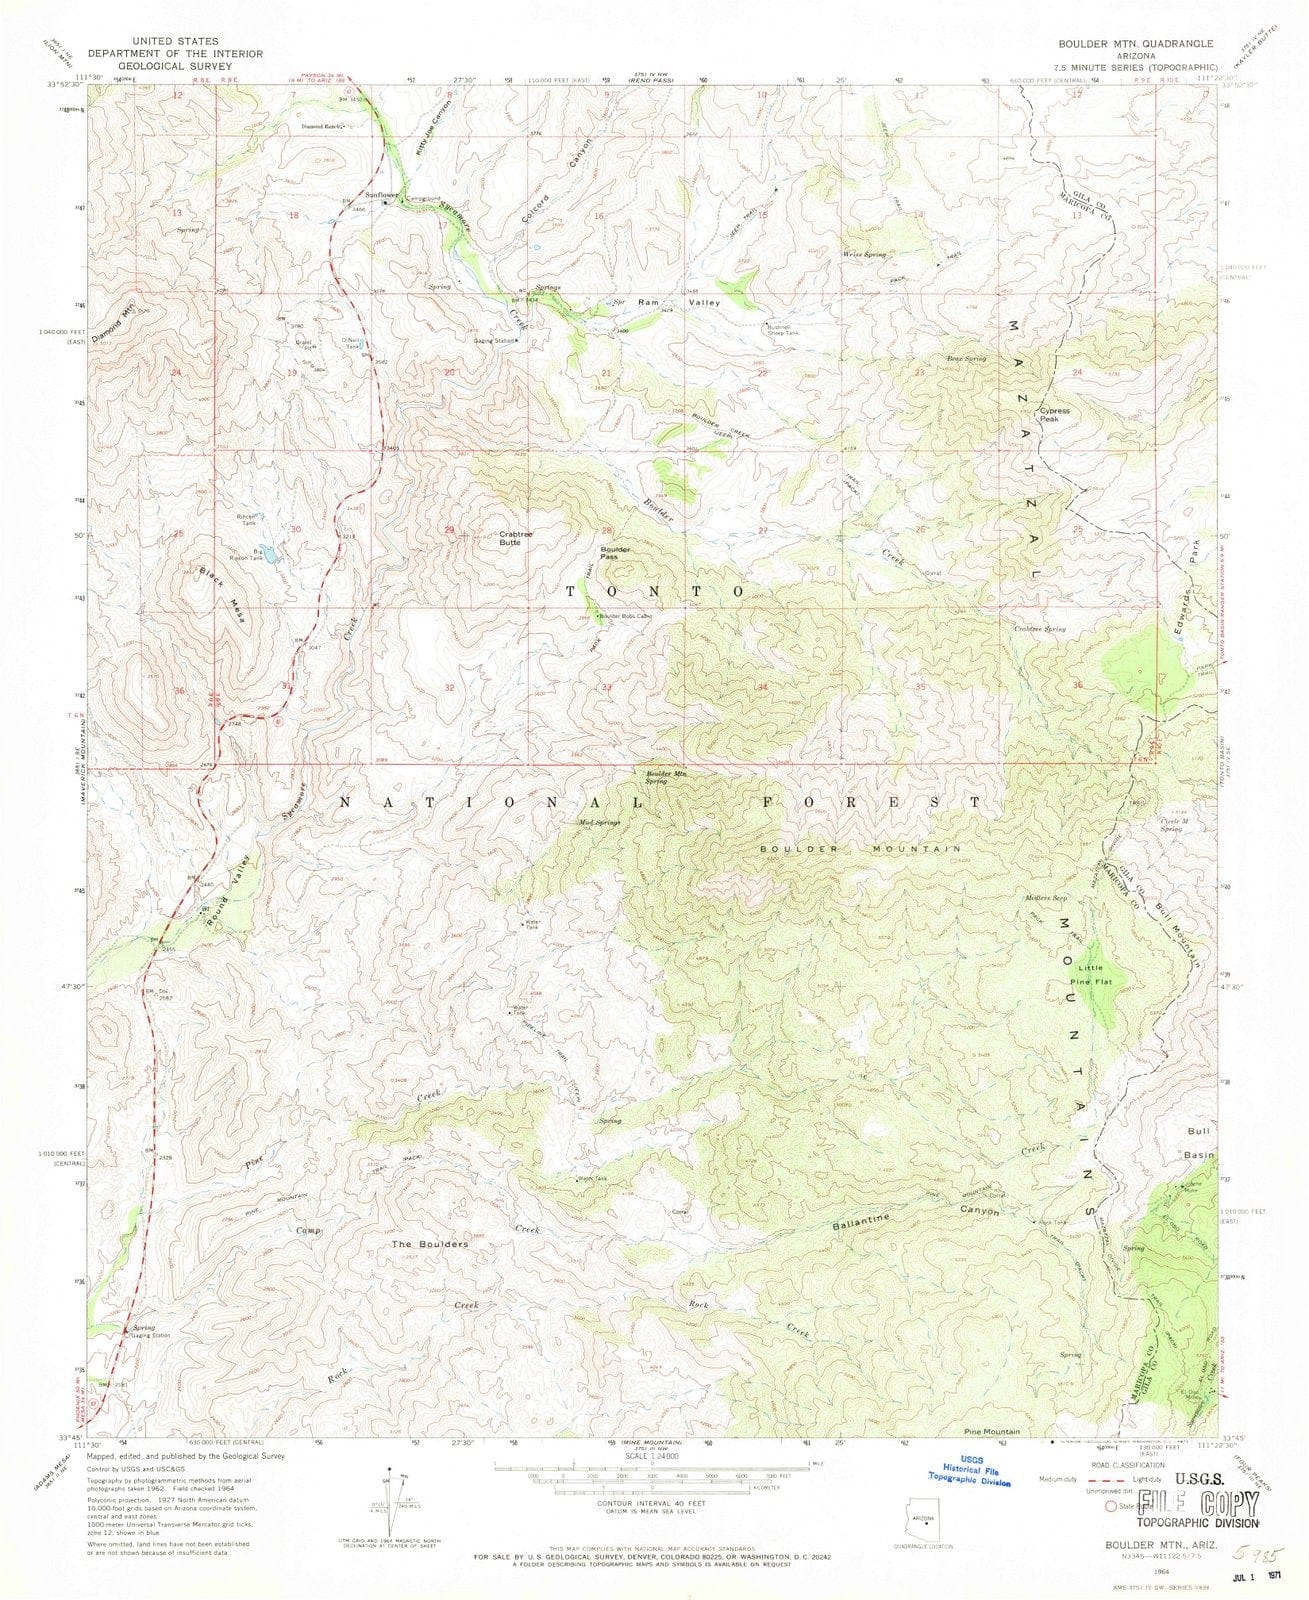 1964 Boulder MTN, AZ - Arizona - USGS Topographic Map